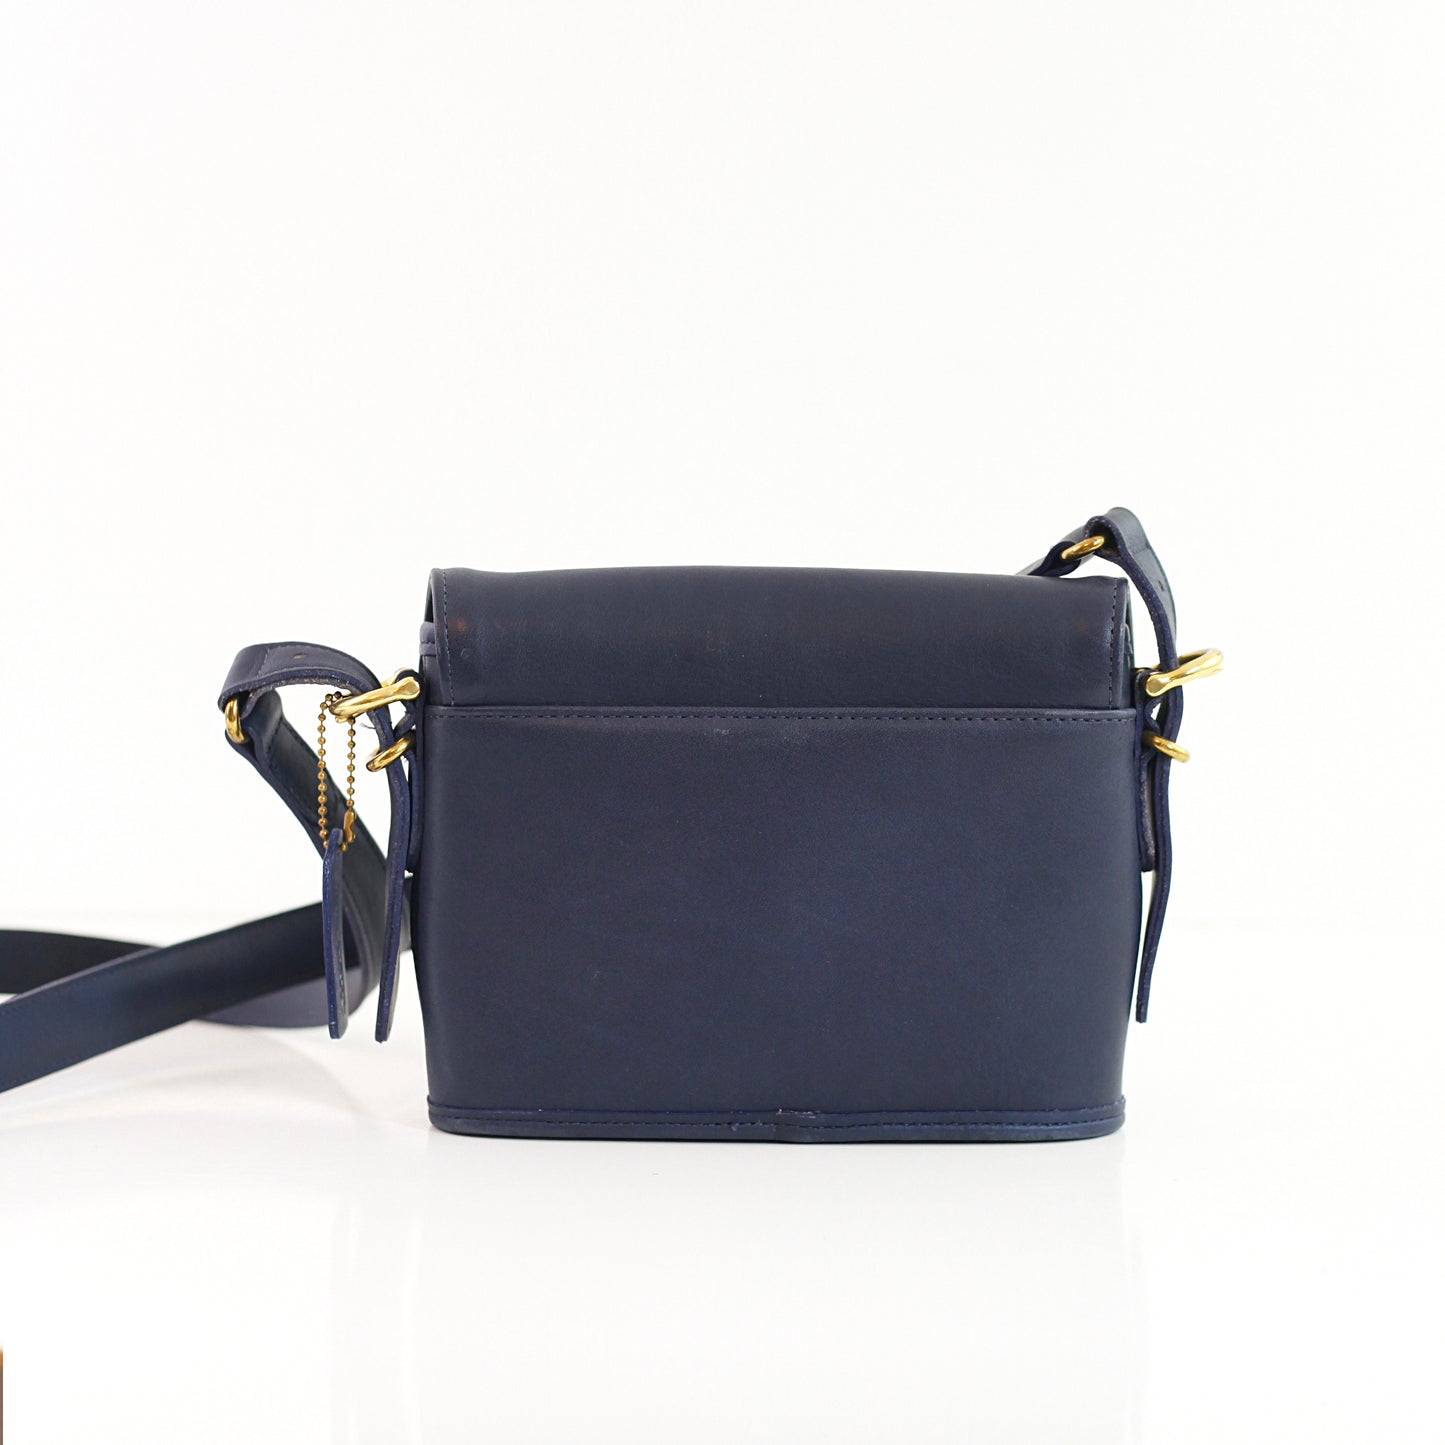 SOLD - Vintage Navy Blue Leather Crossbody Coach Bag